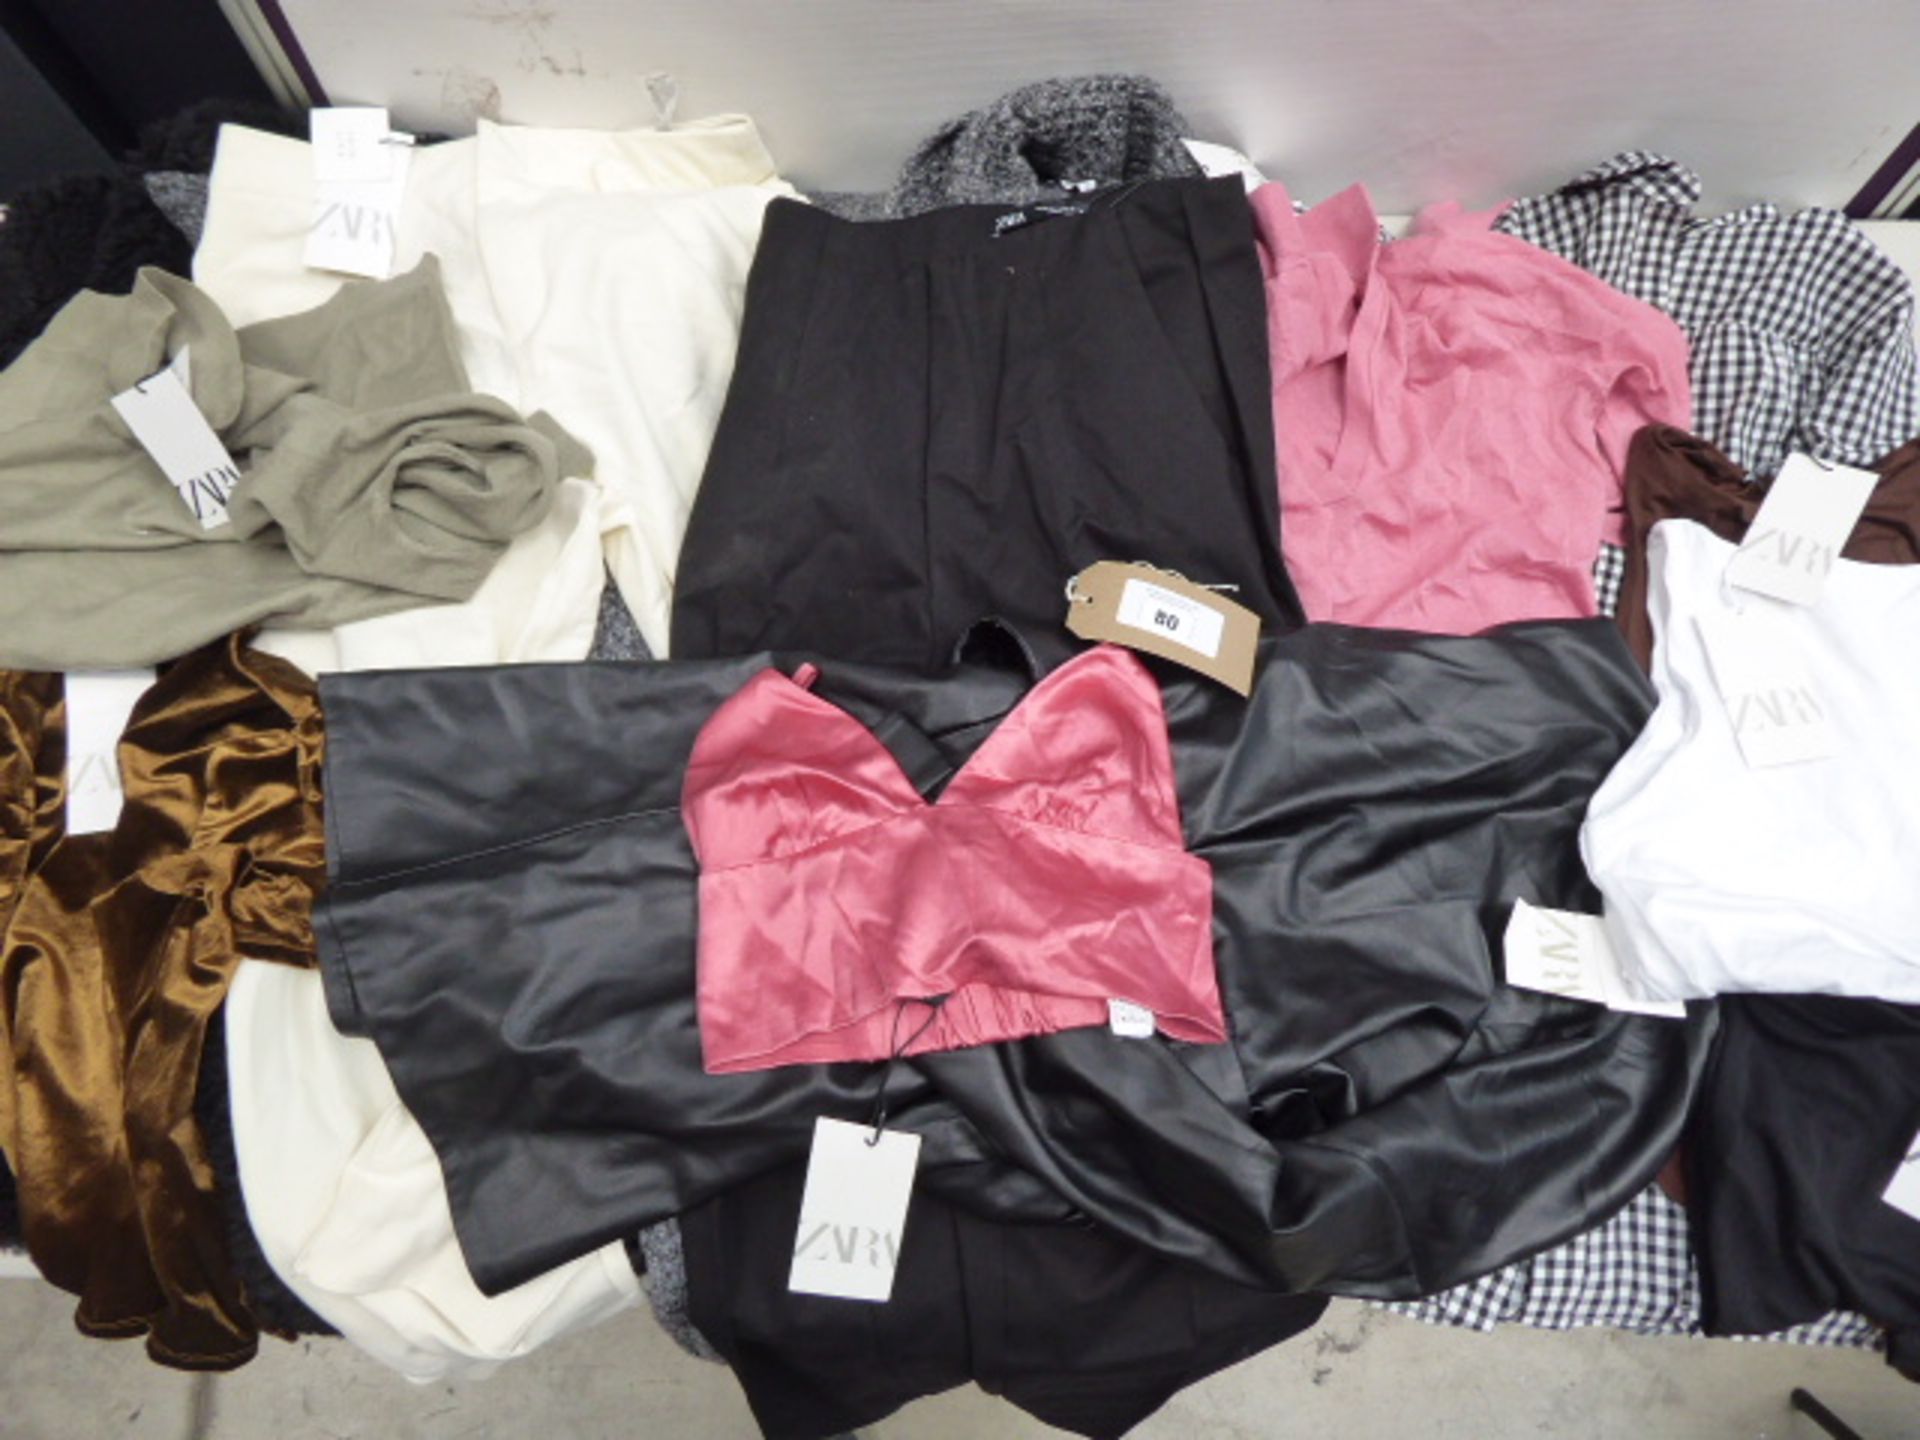 Thirteen pieces of Zara clothing in various sizes